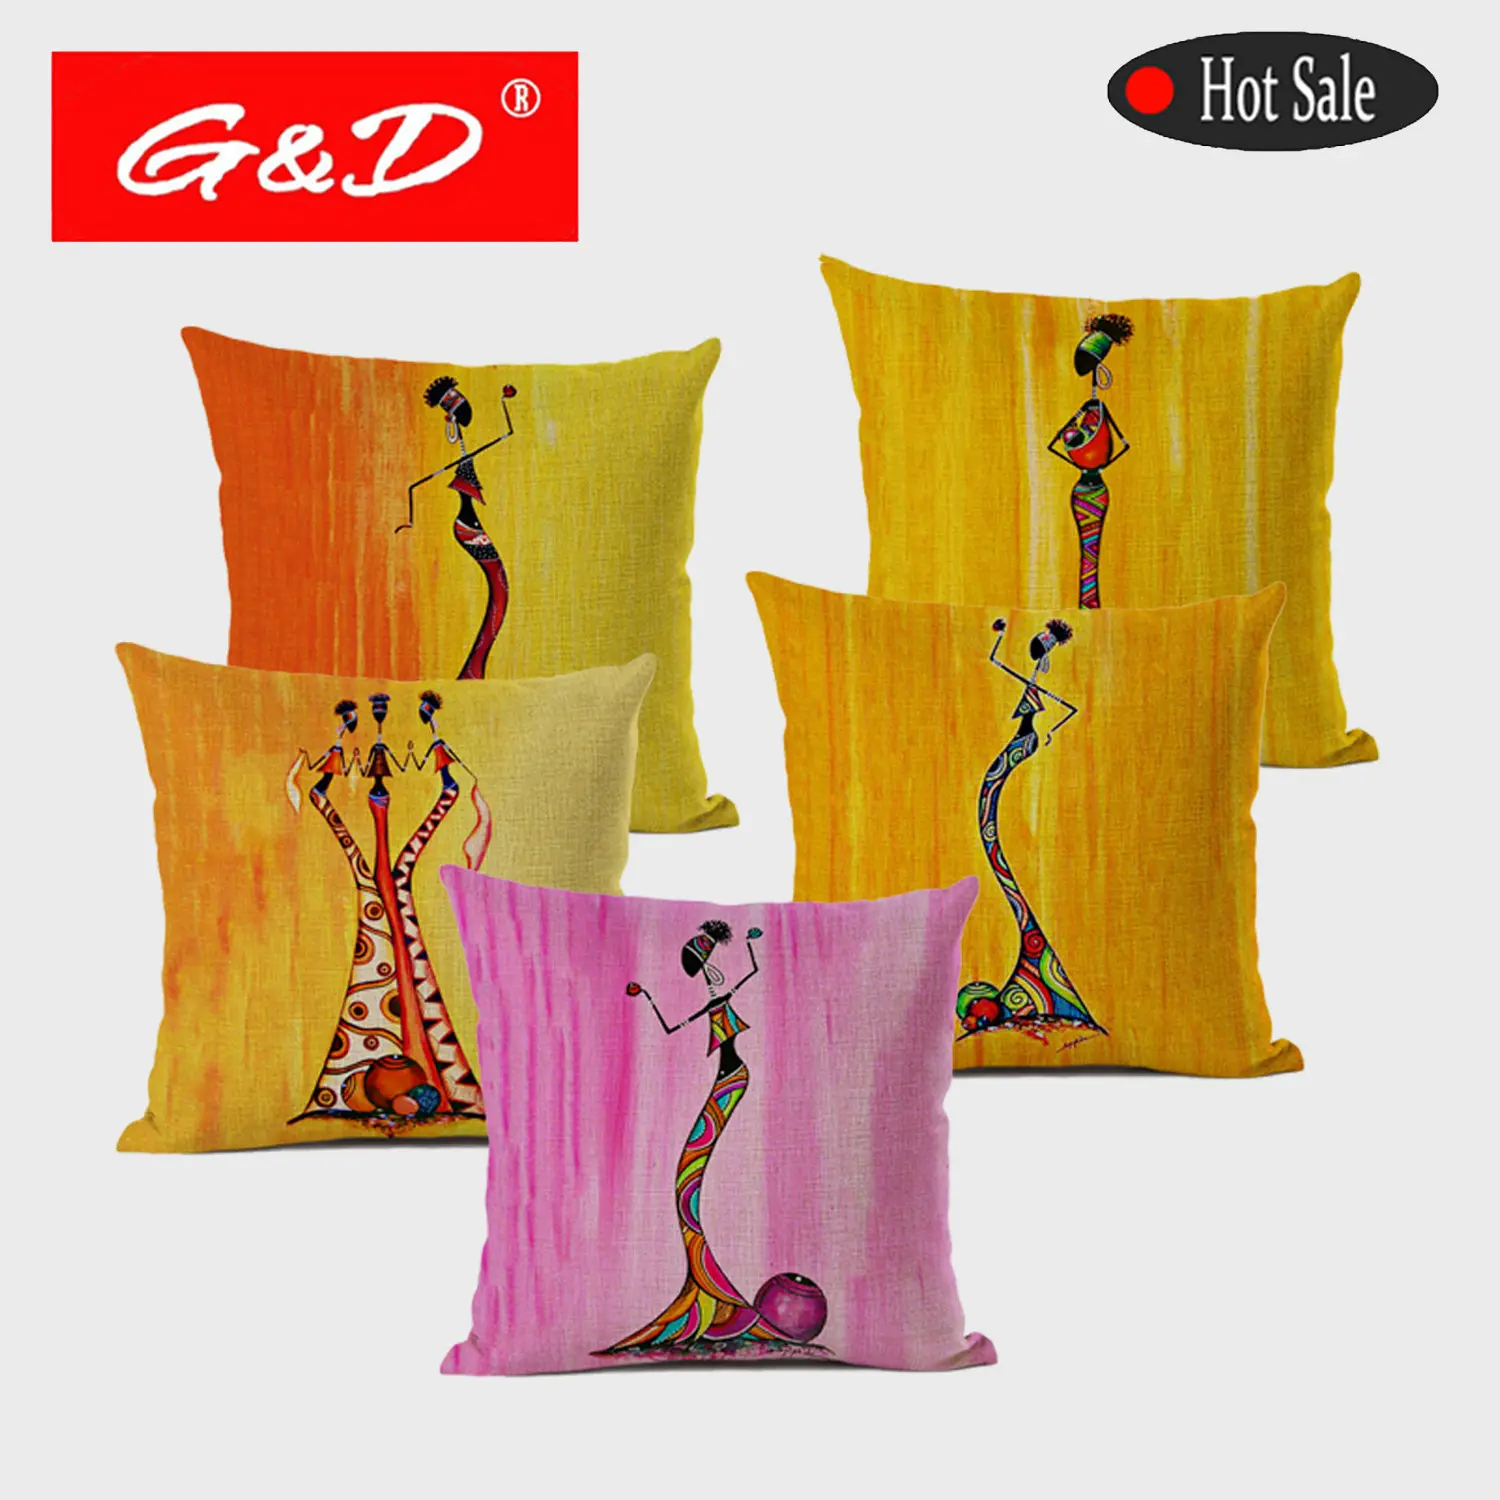 G & D抽象ダンス女性パターンアフリカ45 * 45 CM装飾枕カバー